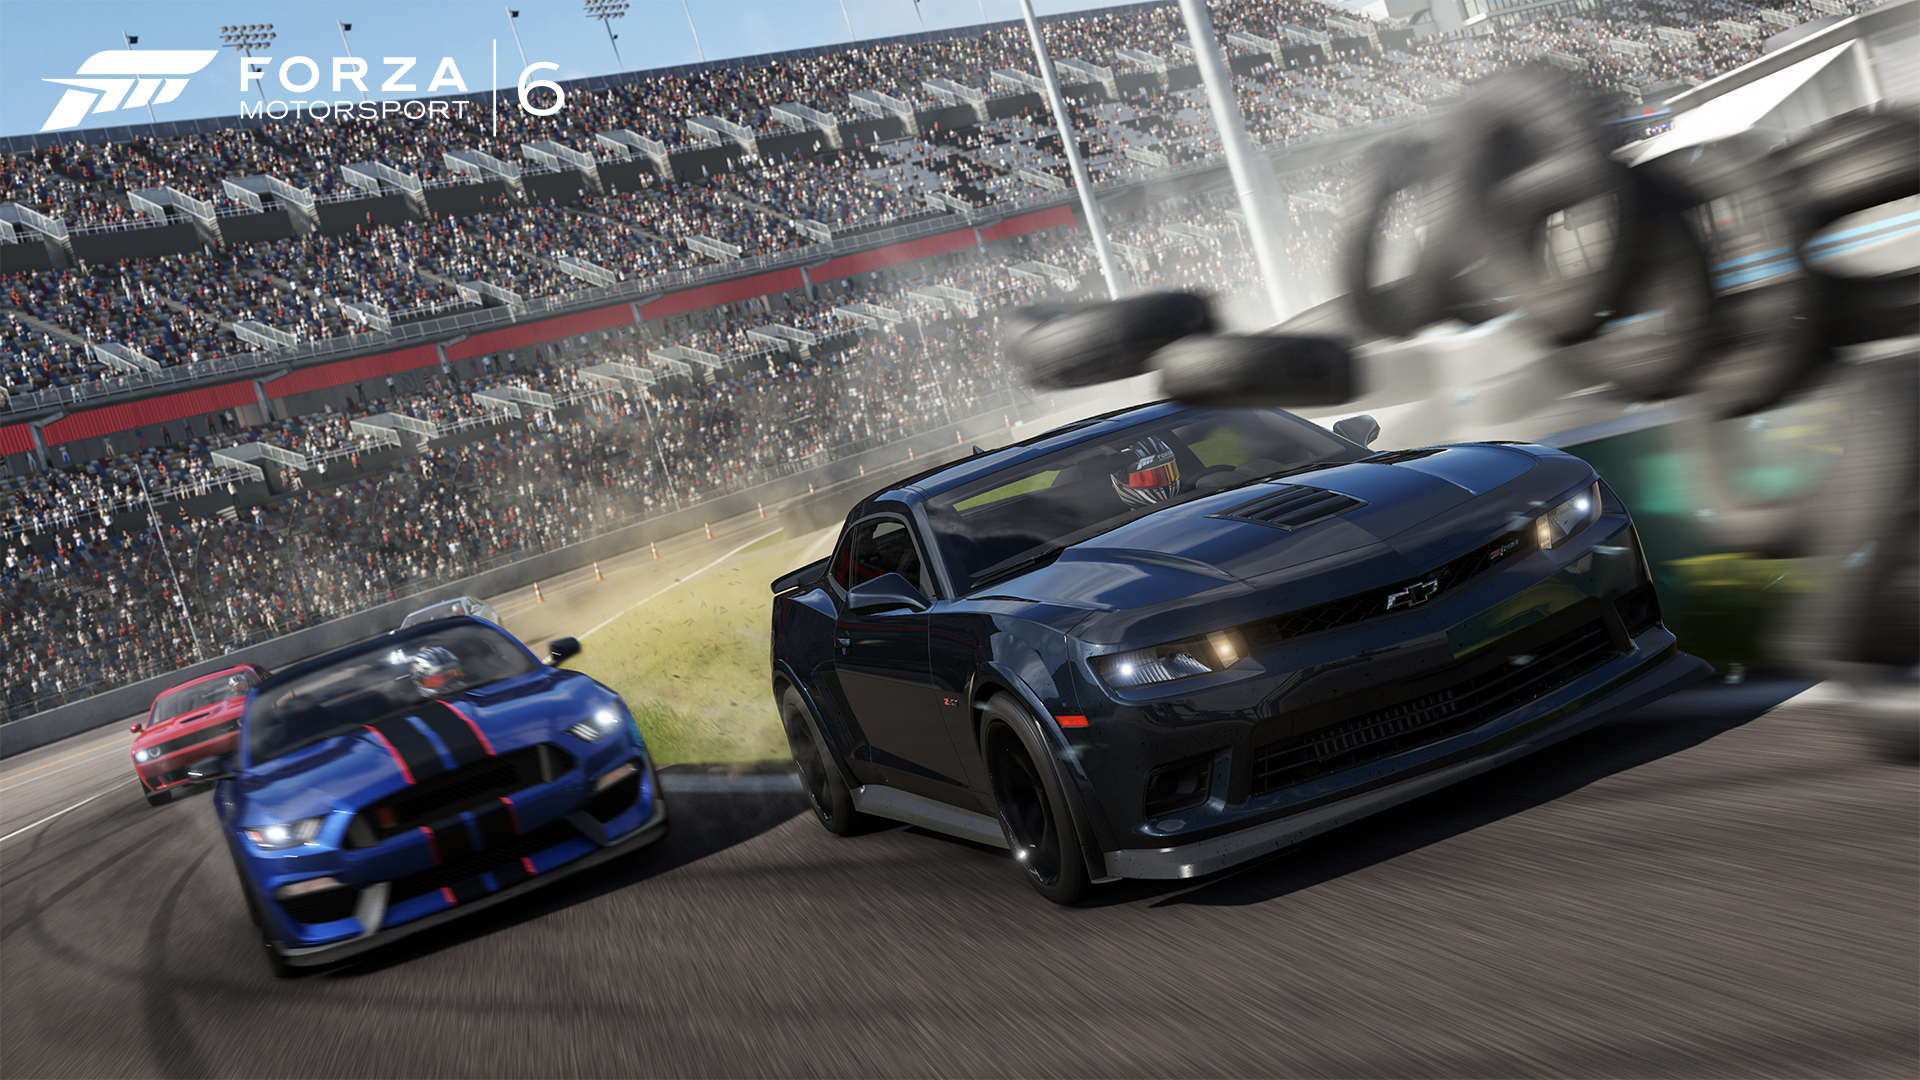 Baixar papel de parede para celular de Forza Motorsport 6, Videogame gratuito.